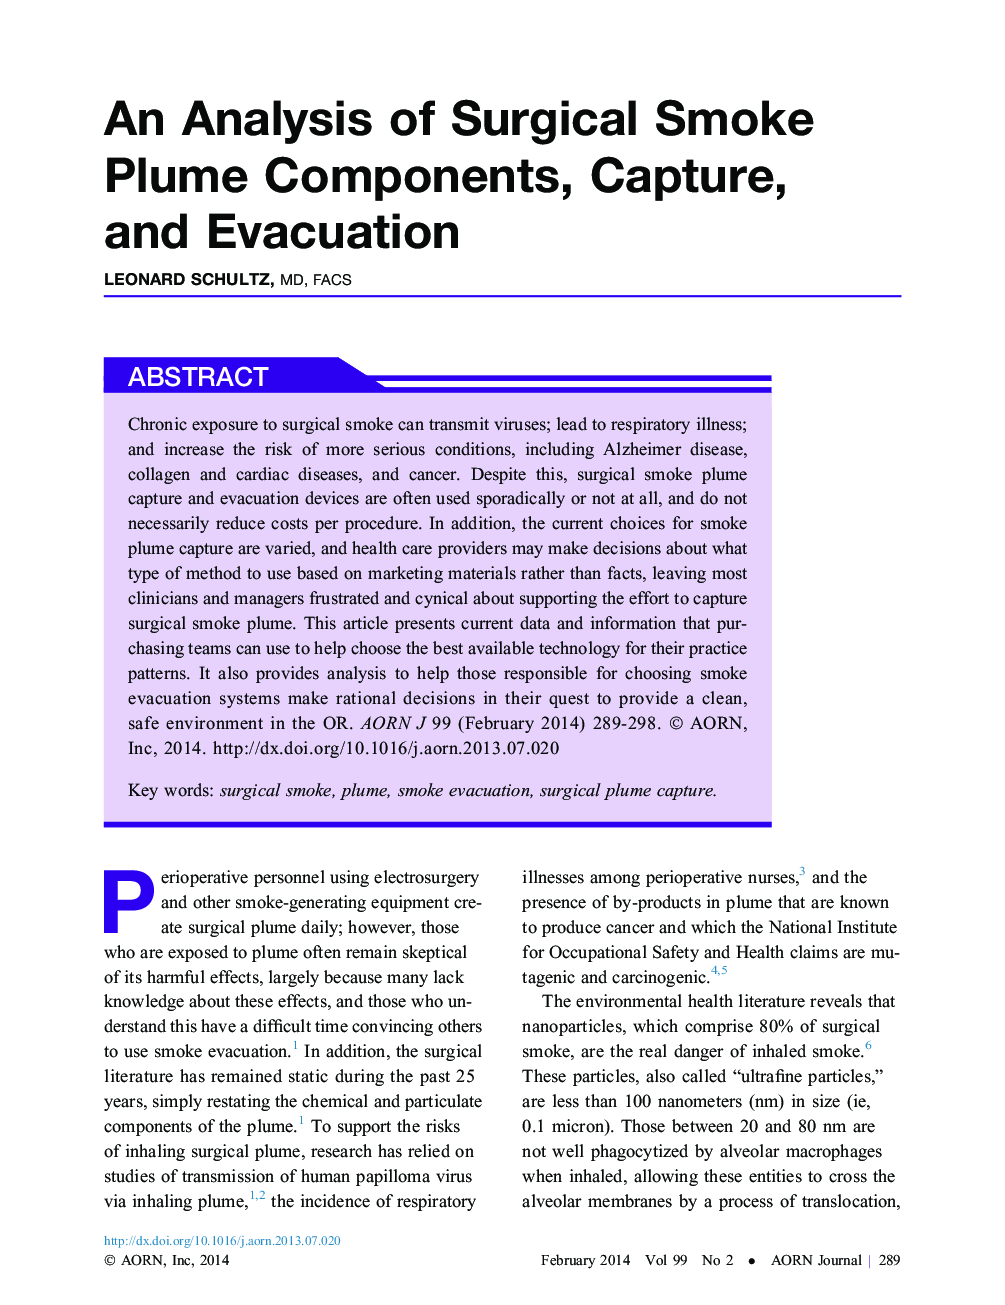 An Analysis of Surgical Smoke Plume Components, Capture, andÂ Evacuation